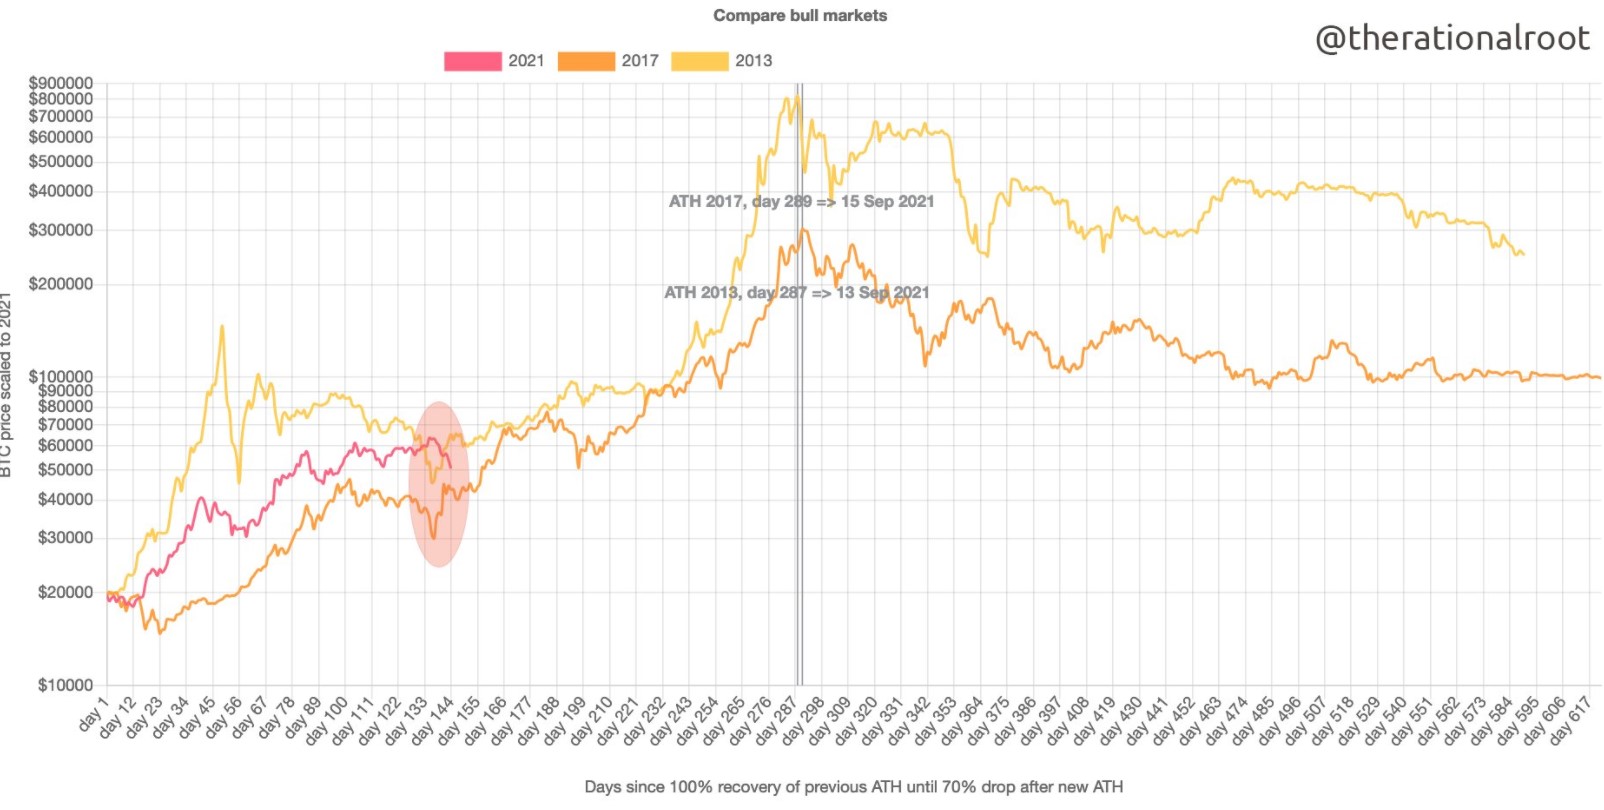 Bitcoin in 2021 versus previous bull markets 